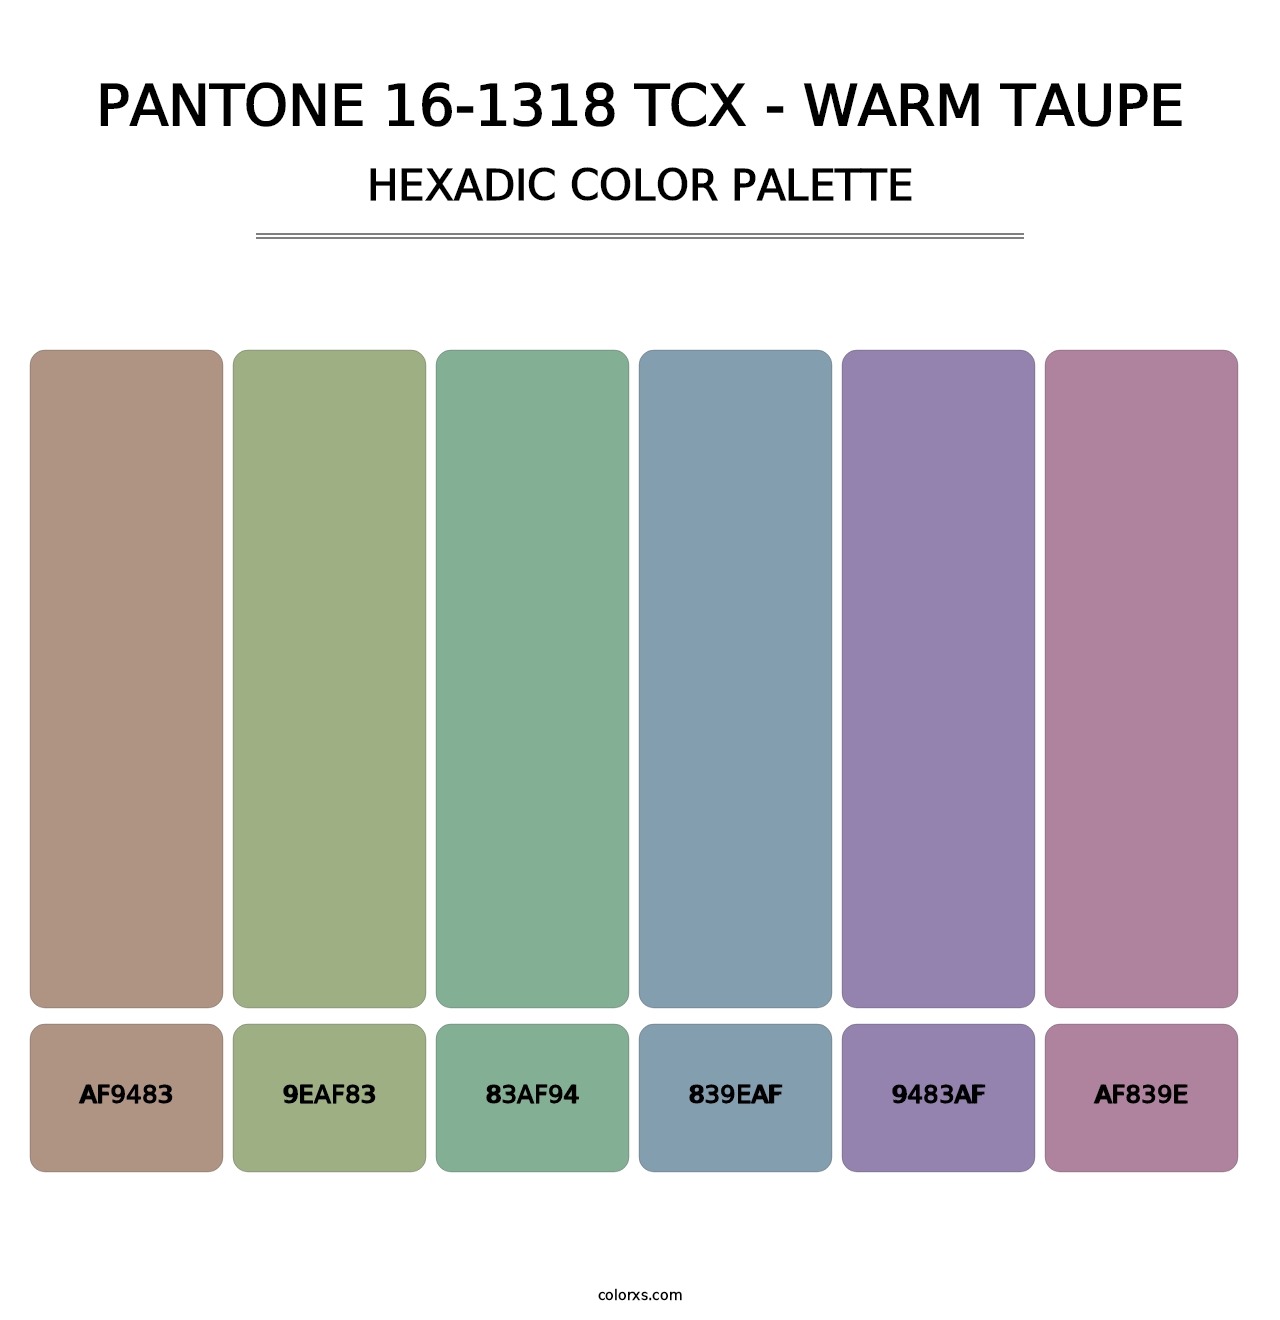 PANTONE 16-1318 TCX - Warm Taupe - Hexadic Color Palette